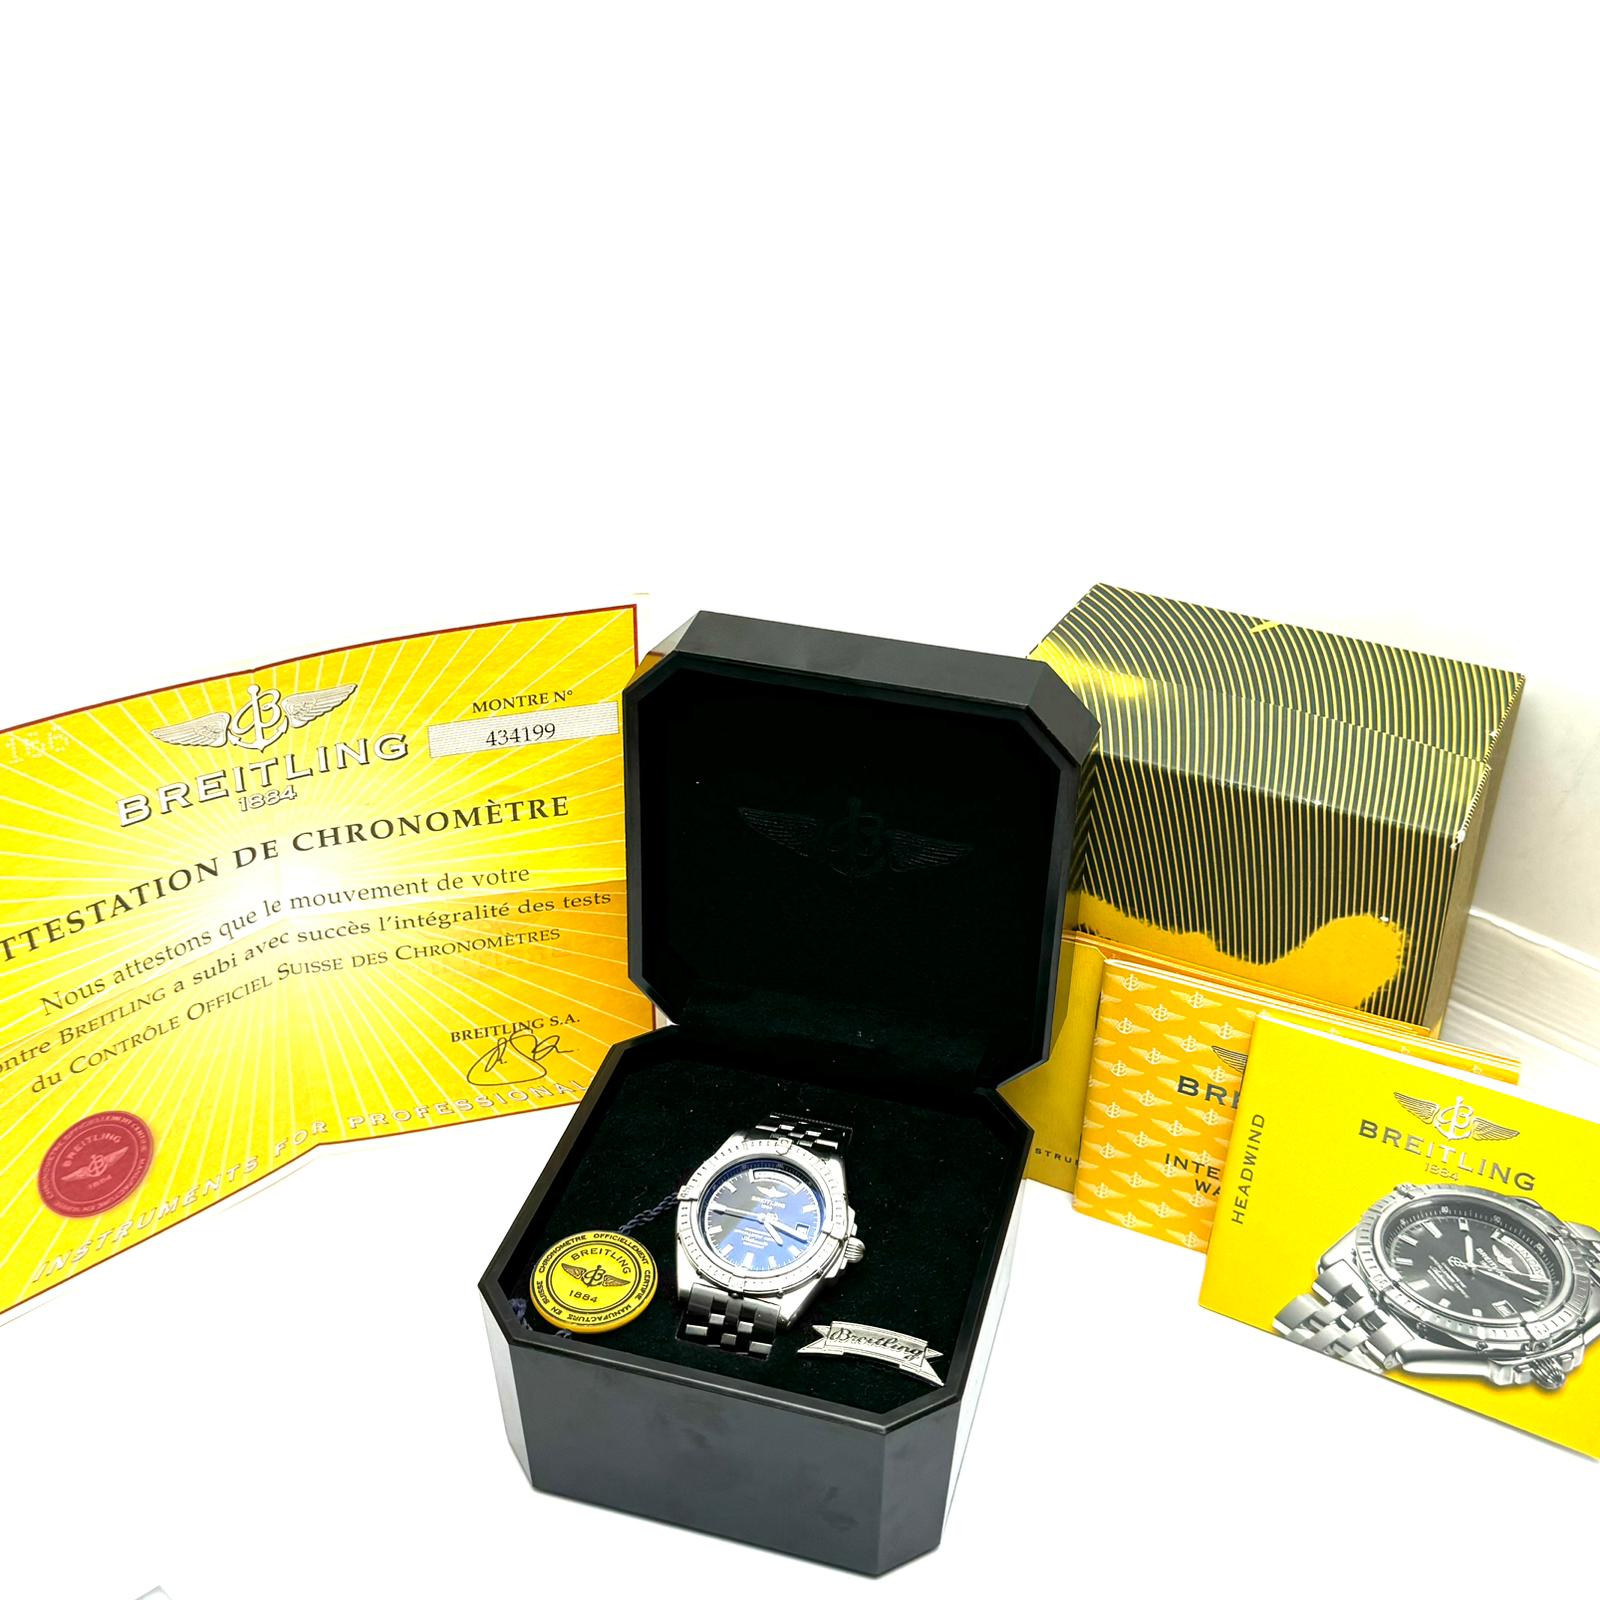 Breitling Headwind A45355 44mm Automatic Watch